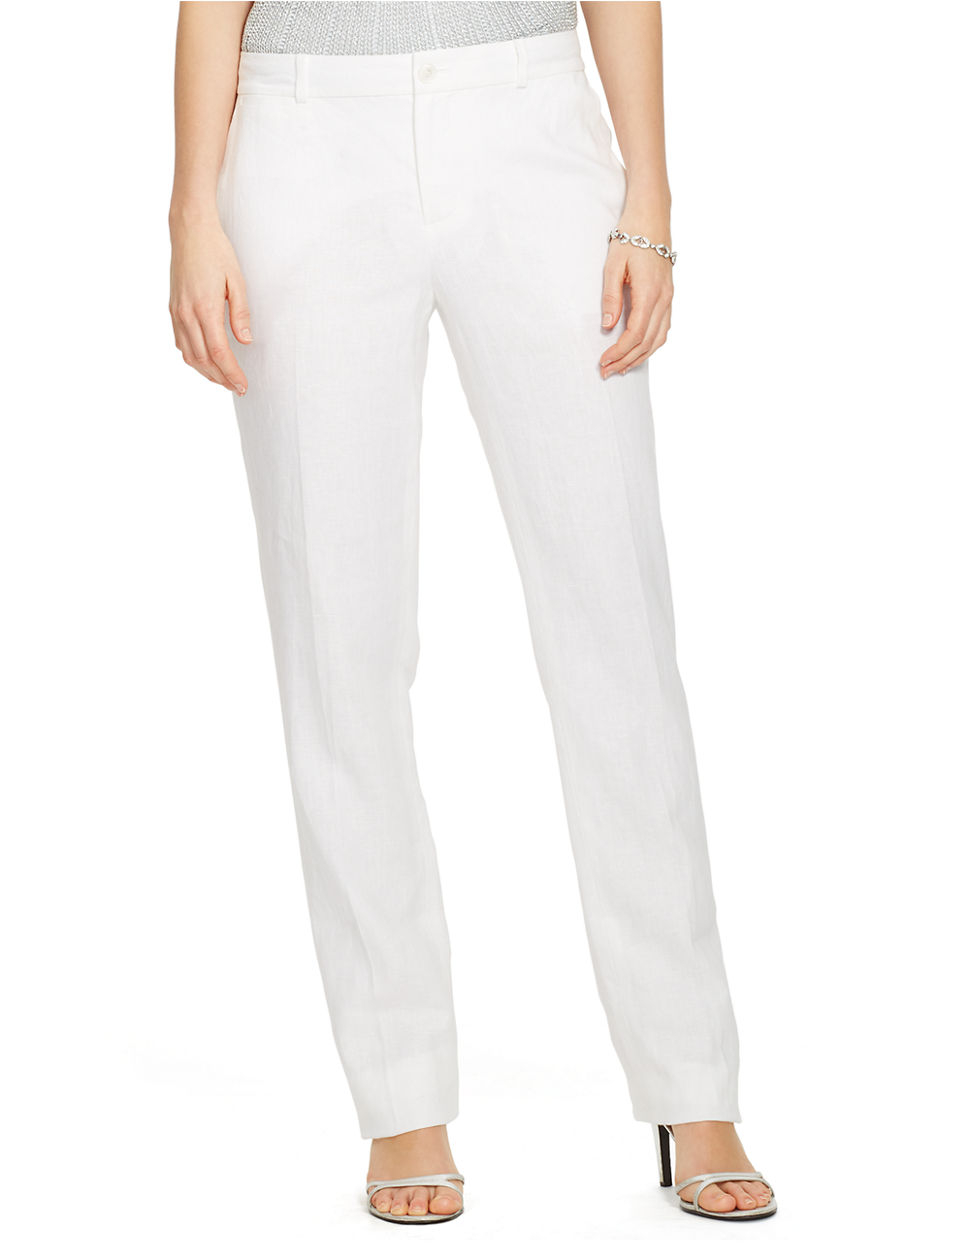 Lyst - Lauren By Ralph Lauren Petite Linen Straight-leg Pants in White